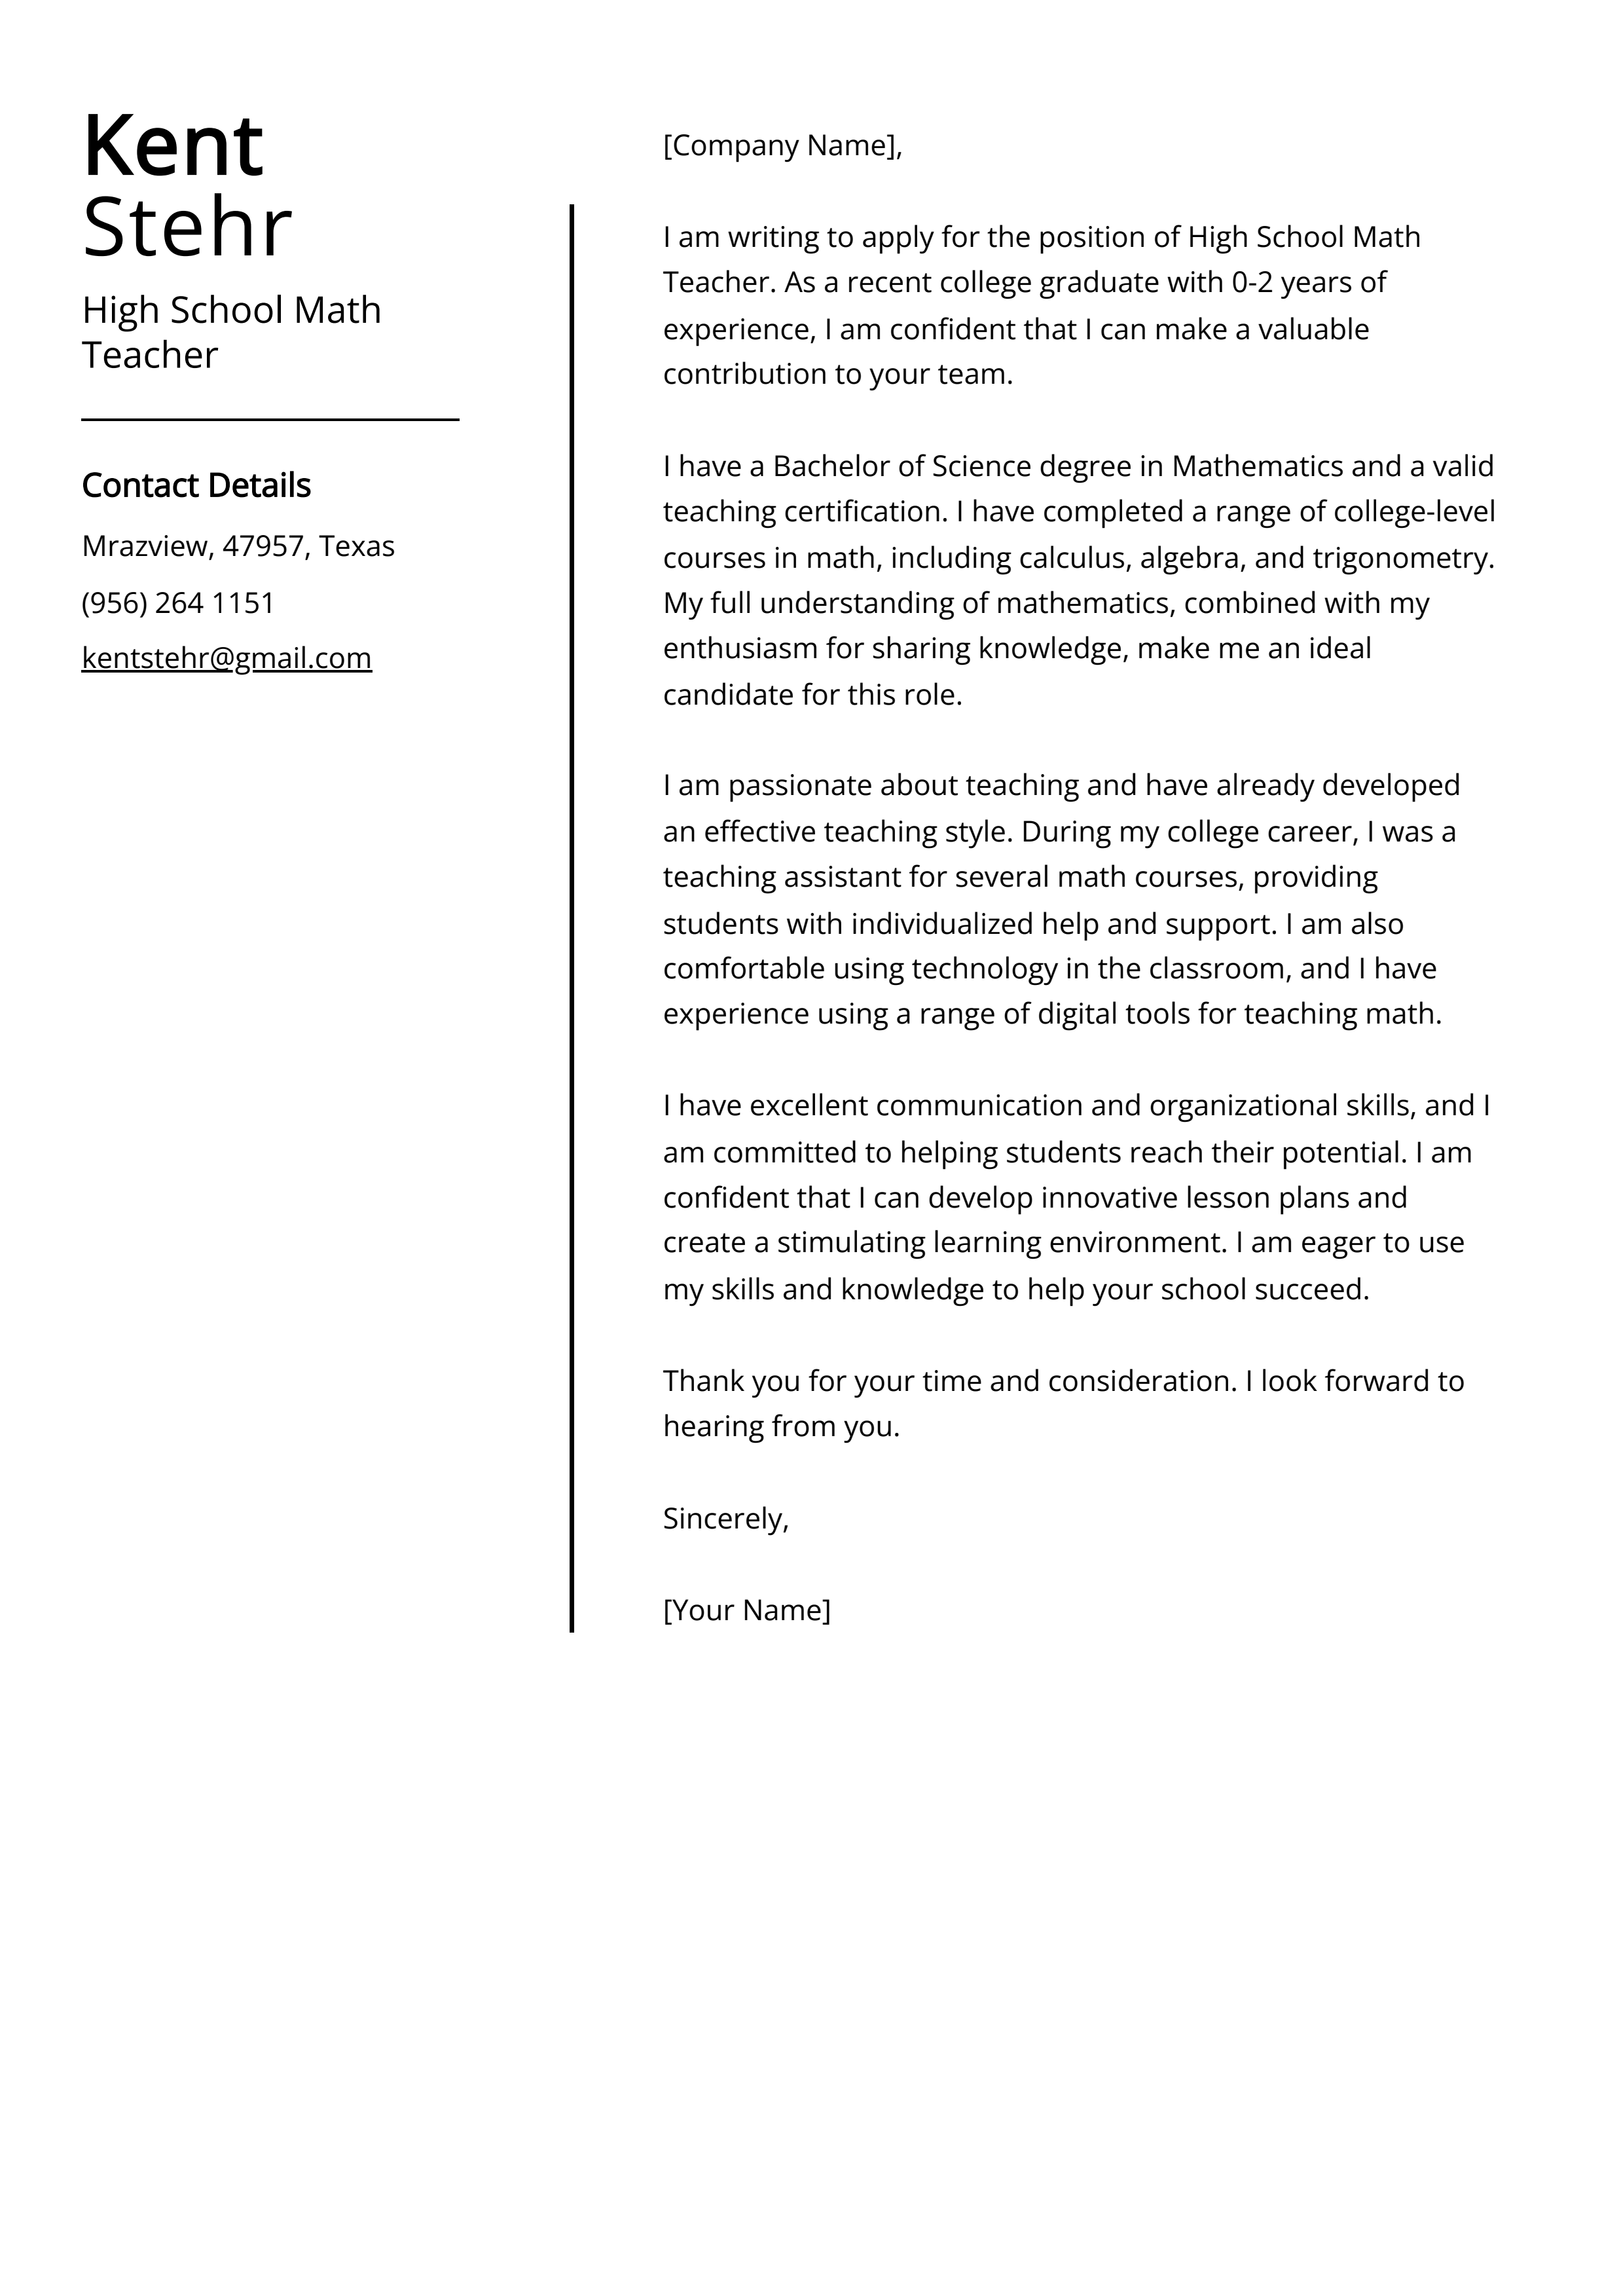 High School Math Teacher Cover Letter Example